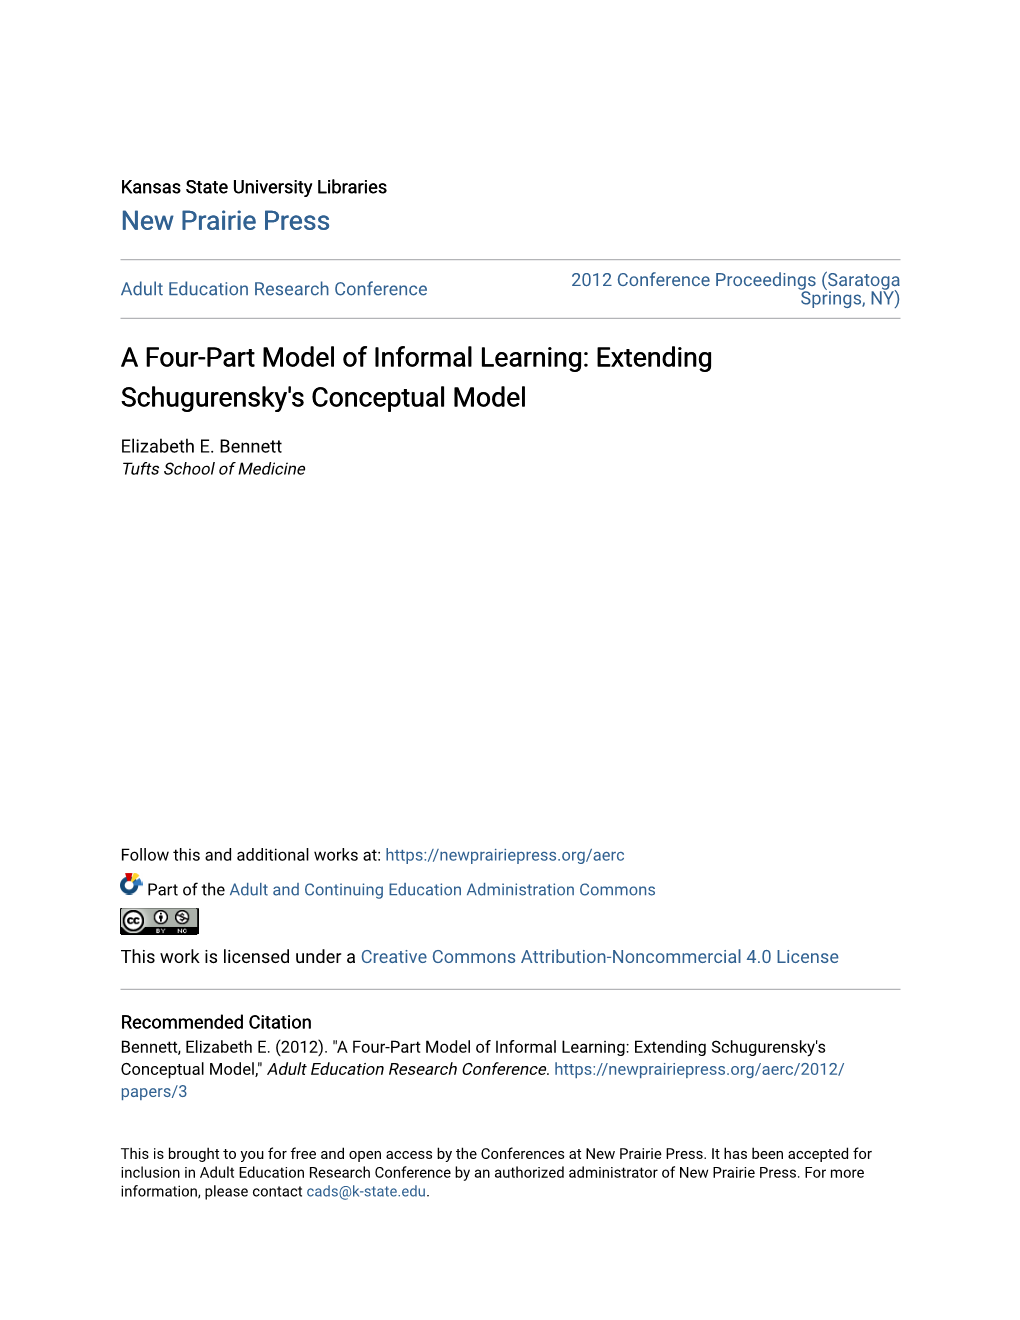 A Four-Part Model of Informal Learning: Extending Schugurensky's Conceptual Model